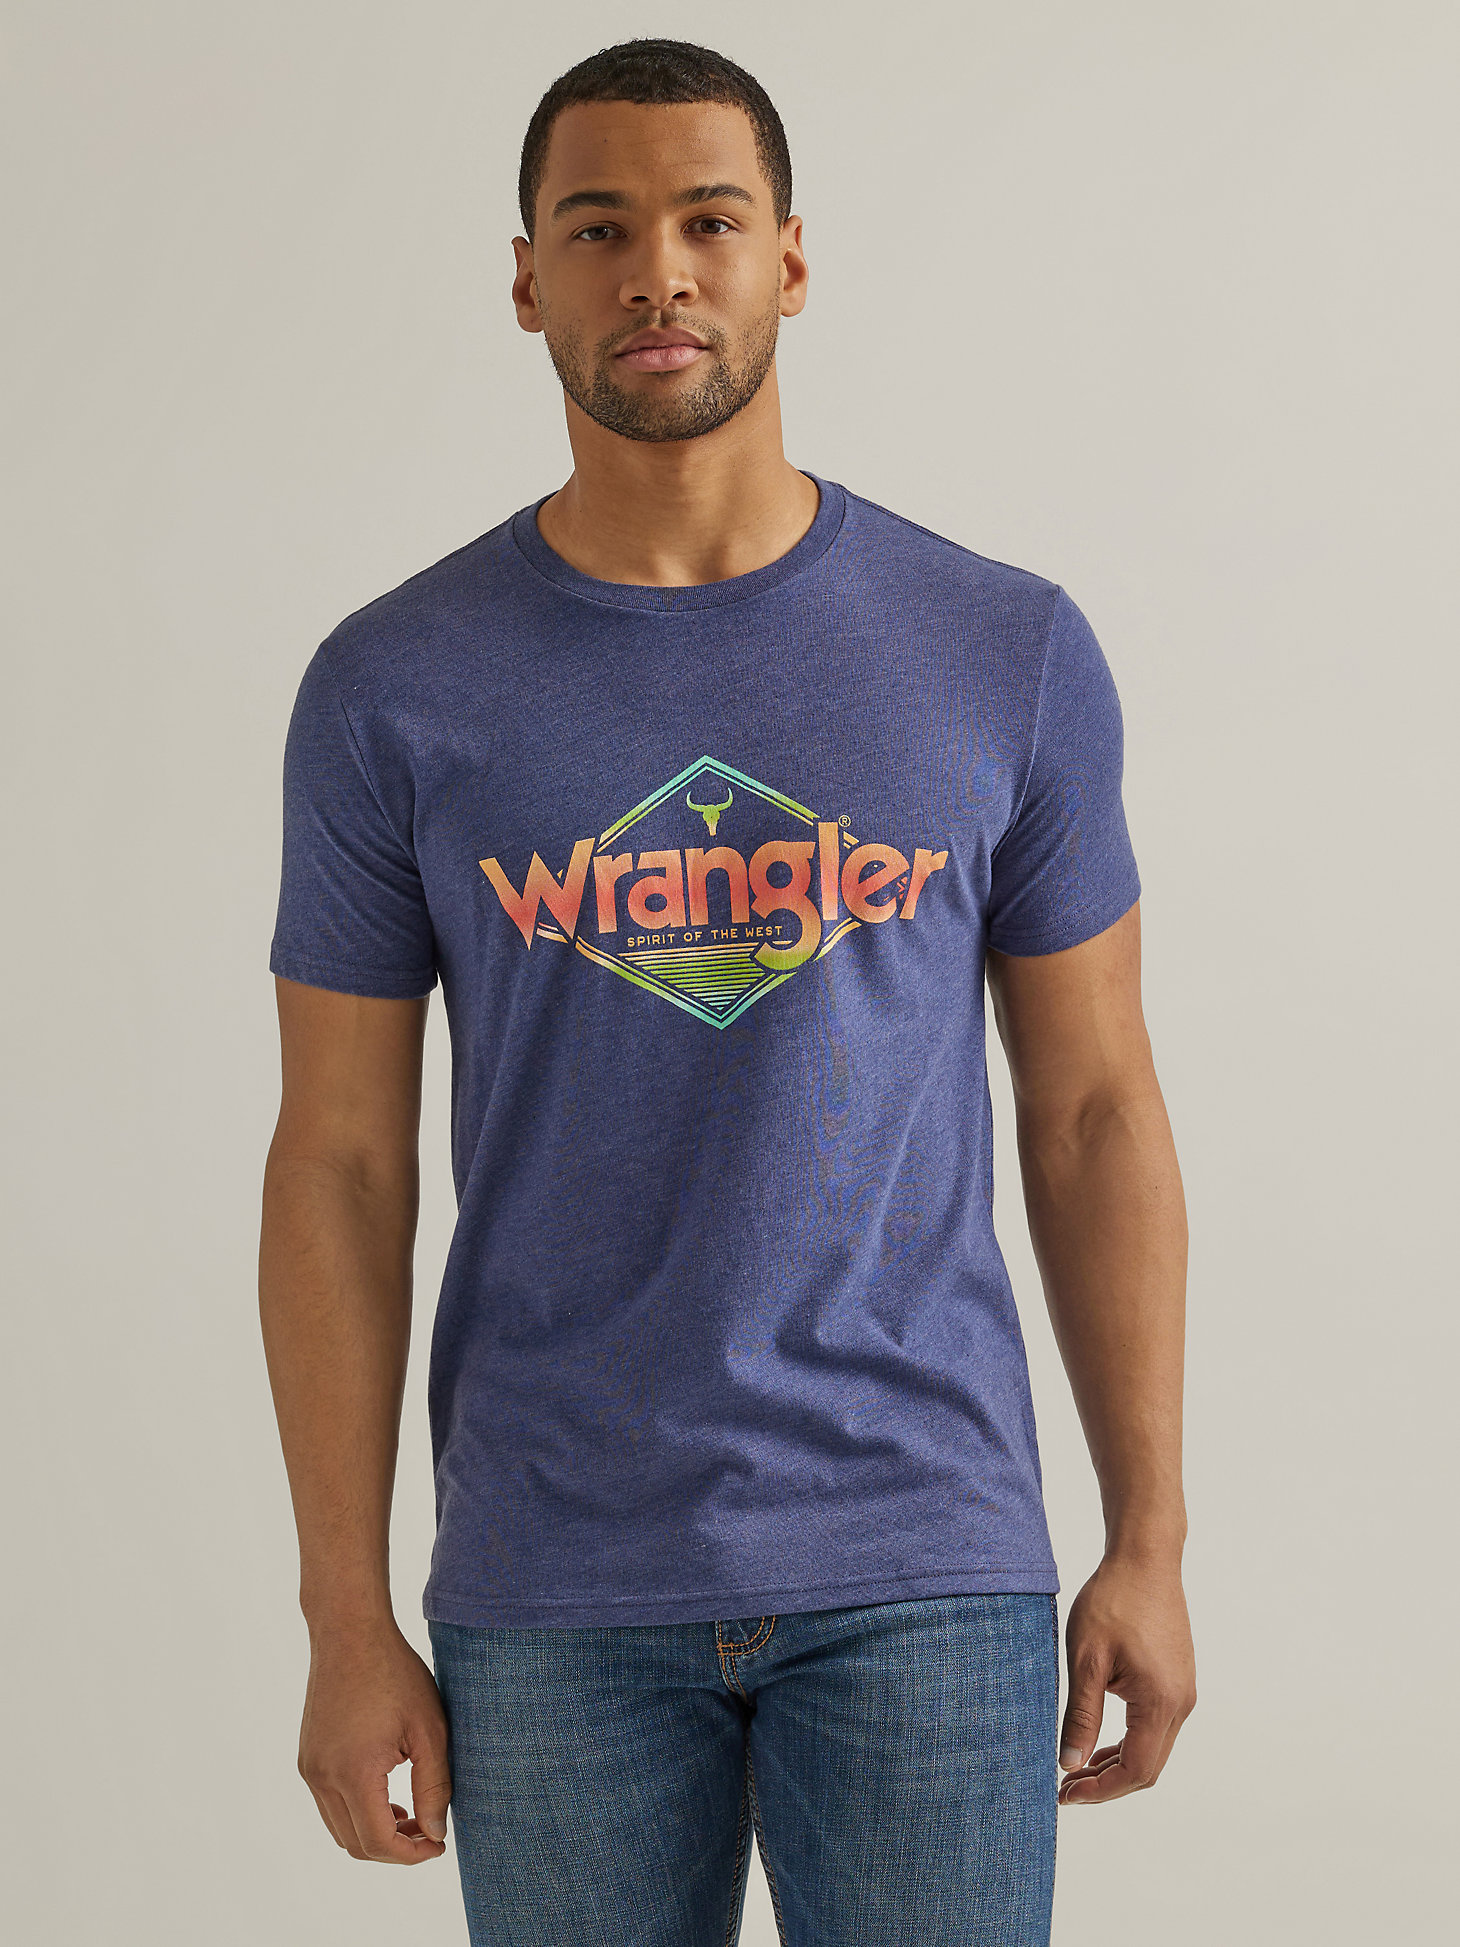 Wrangler Authentic Western Diamond T-Shirt